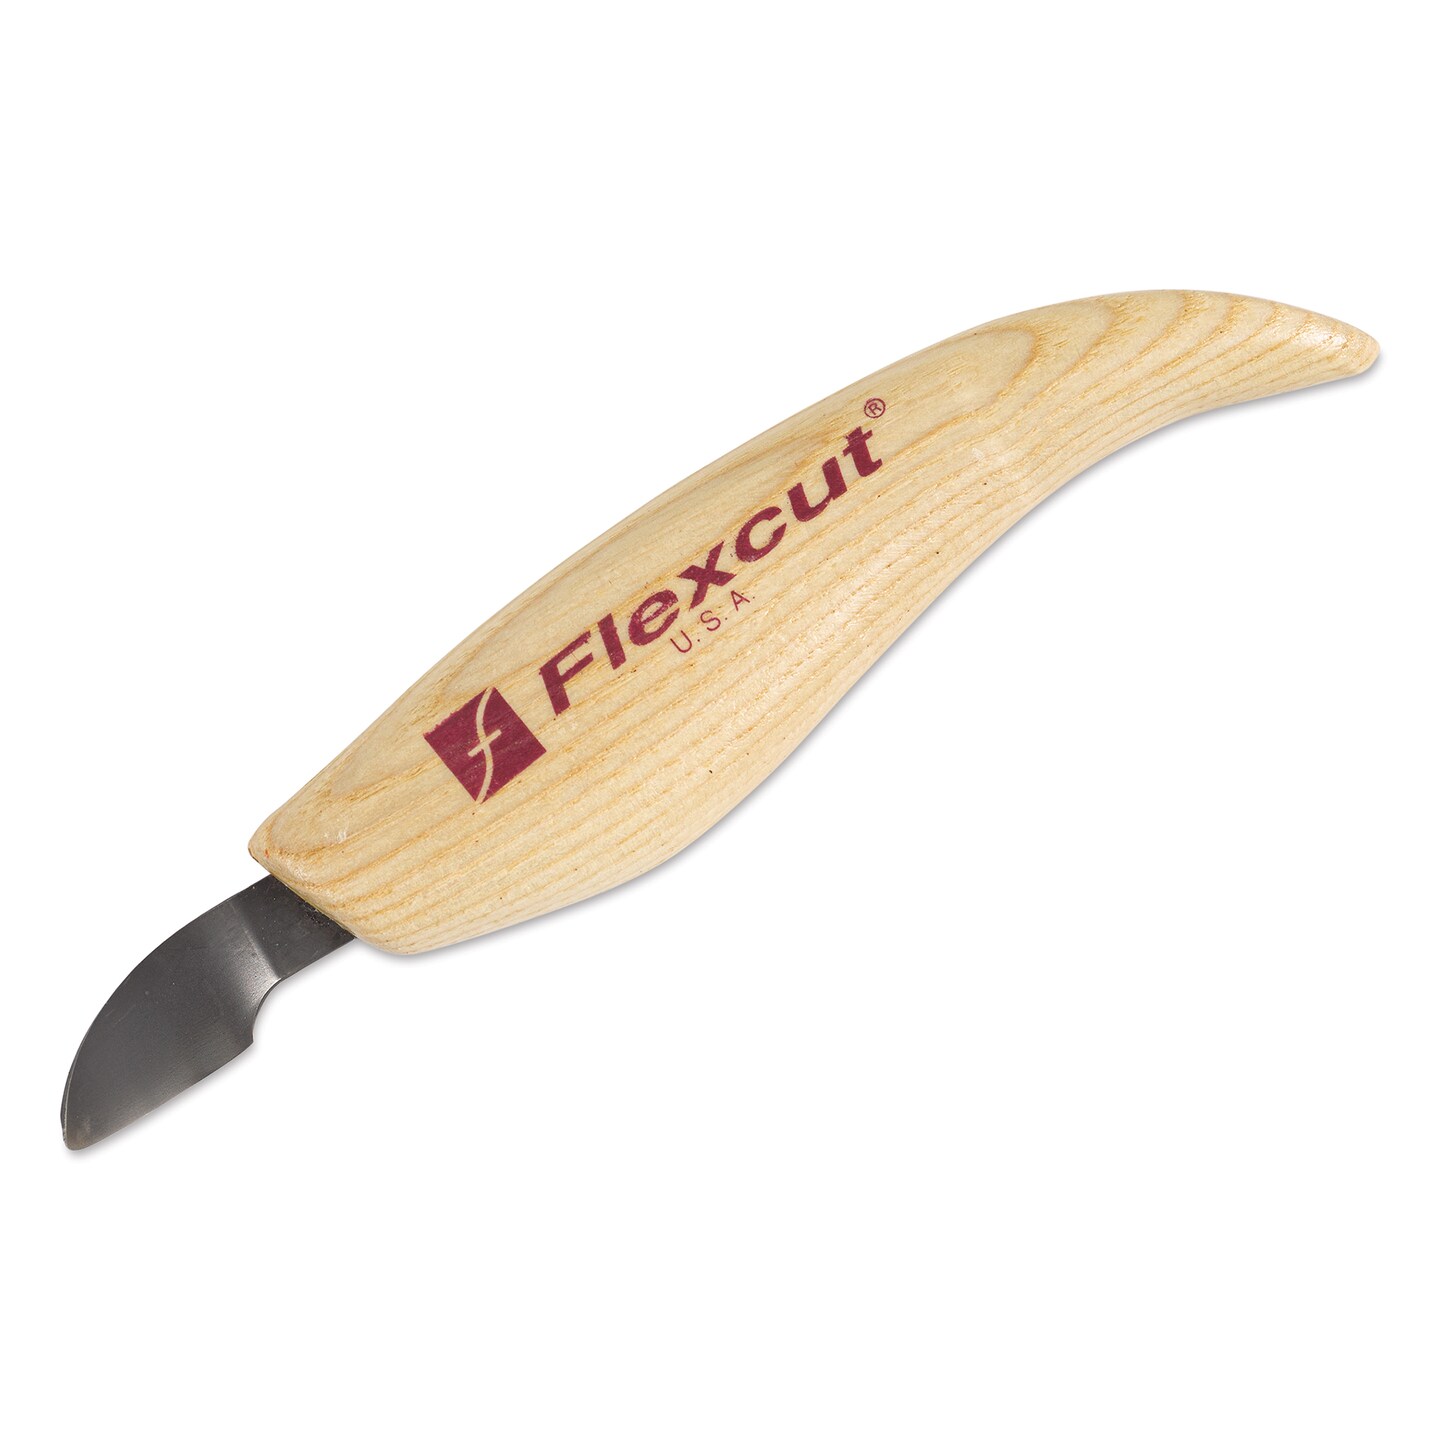 Flexcut Right-Handed Hook Knife